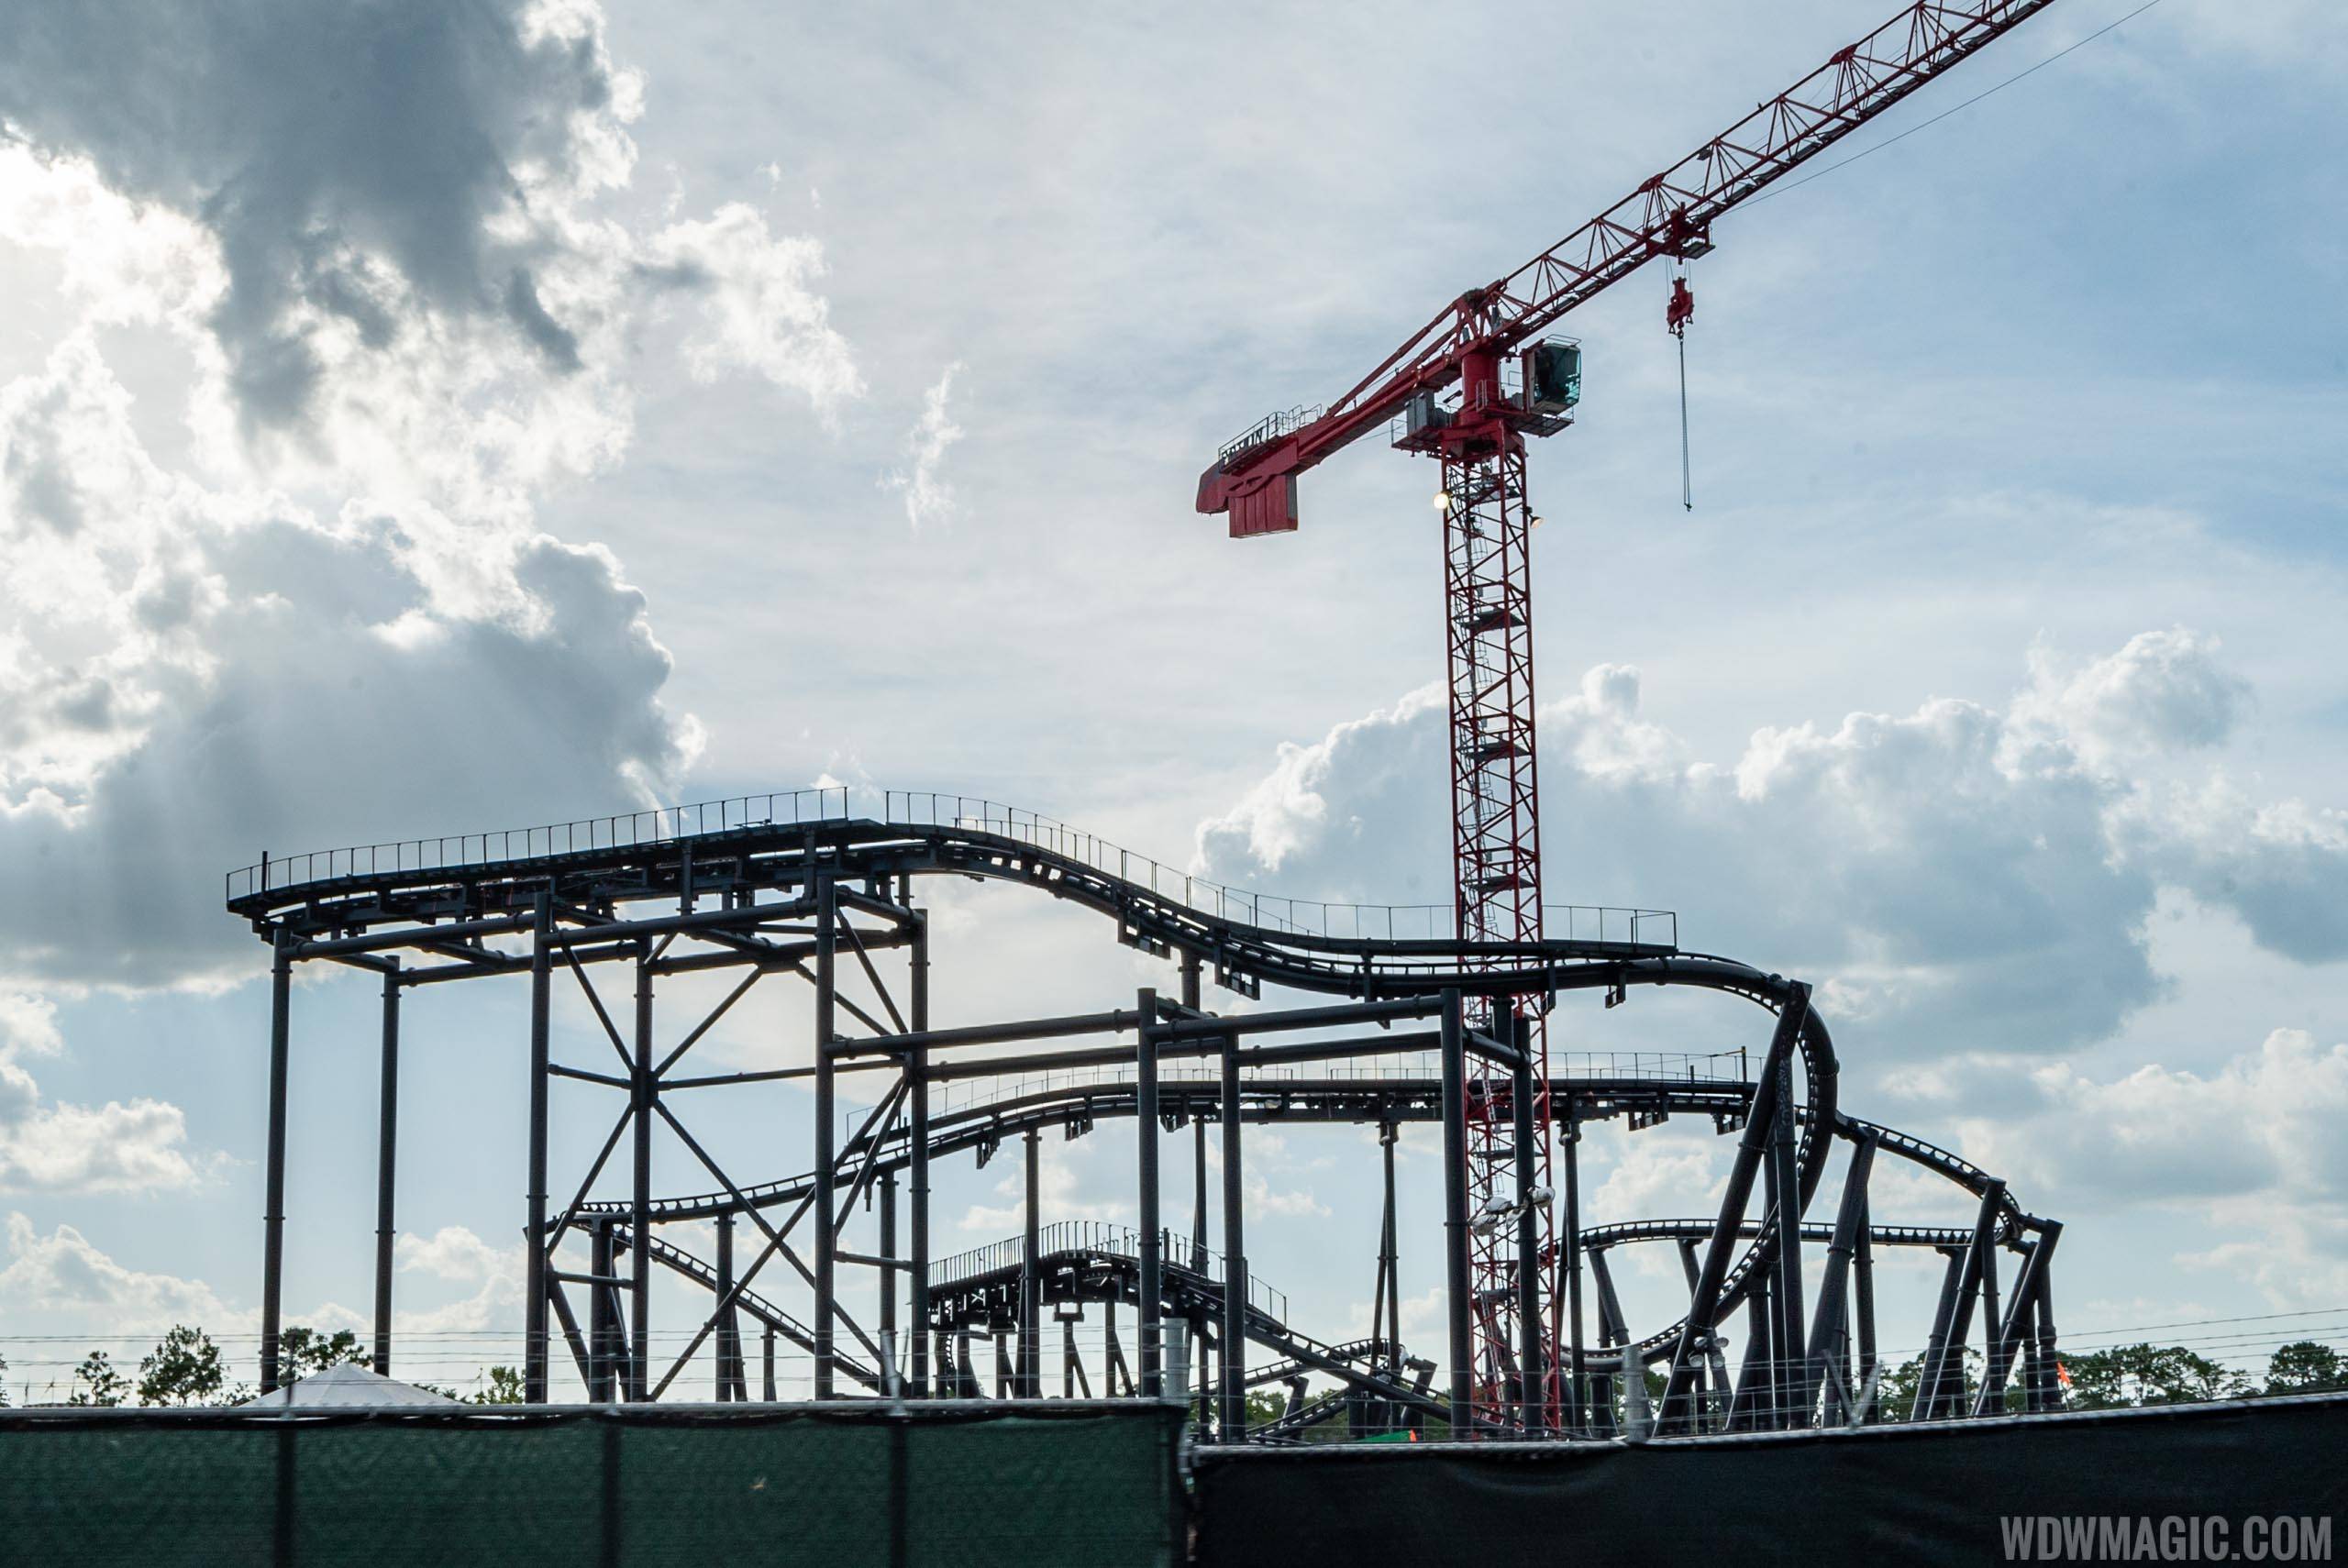 PHOTOS - TRON rollercoaster construction at the Magic Kingdom